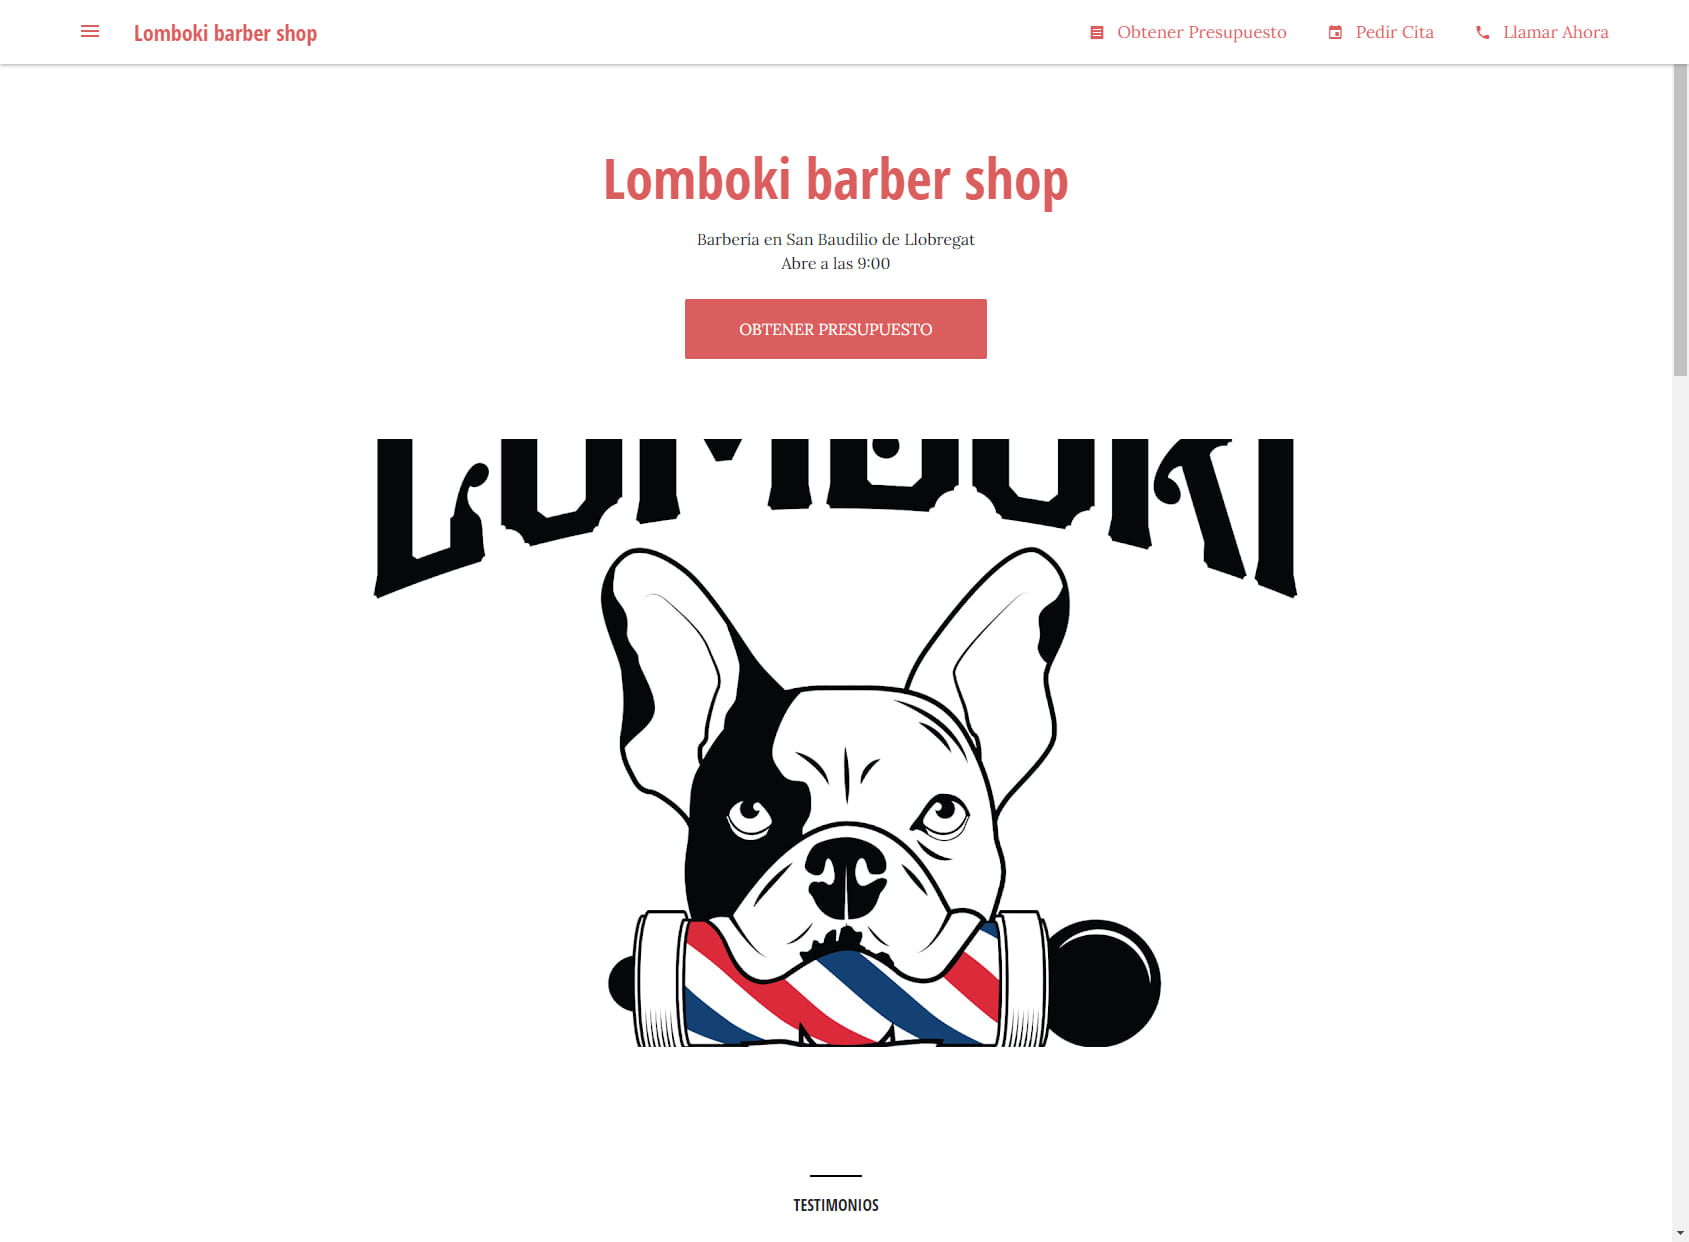 Lomboki barber shop